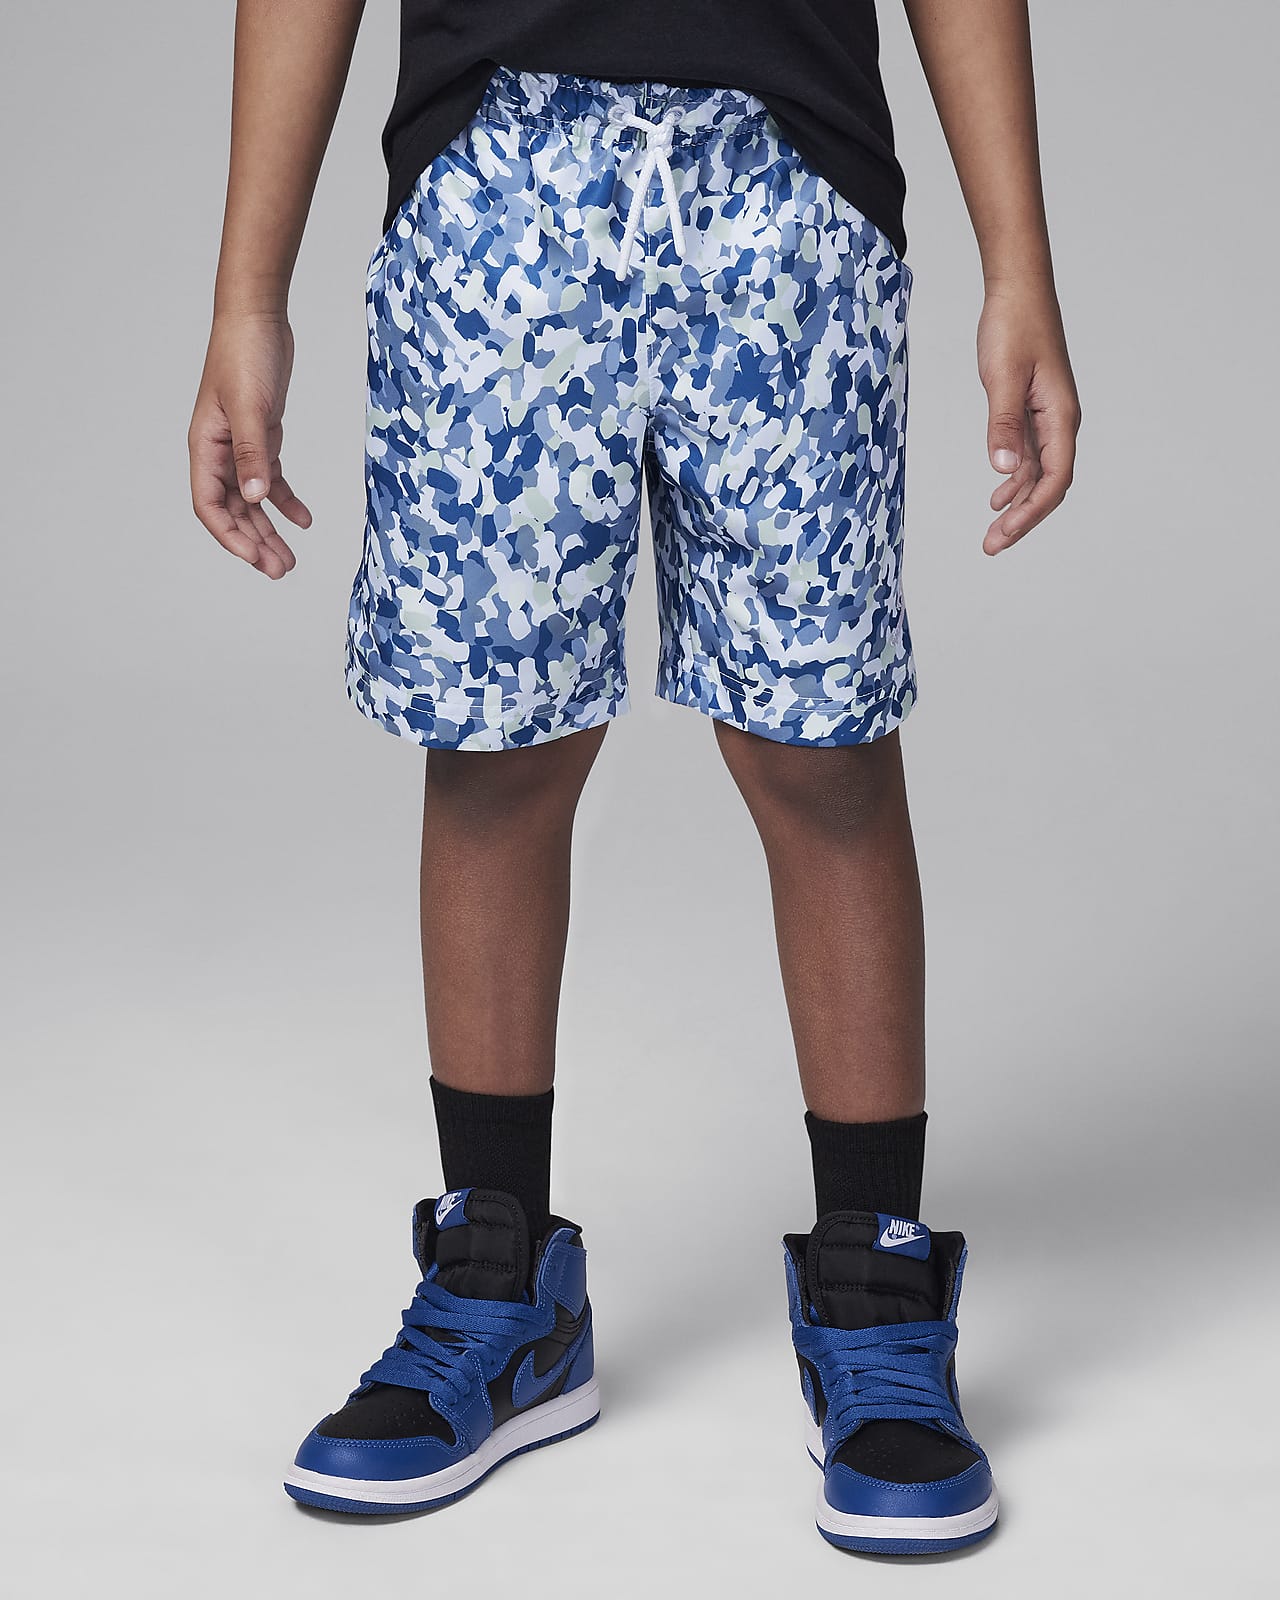 Jordan MJ Essentials Poolside Little Kids' Printed Shorts